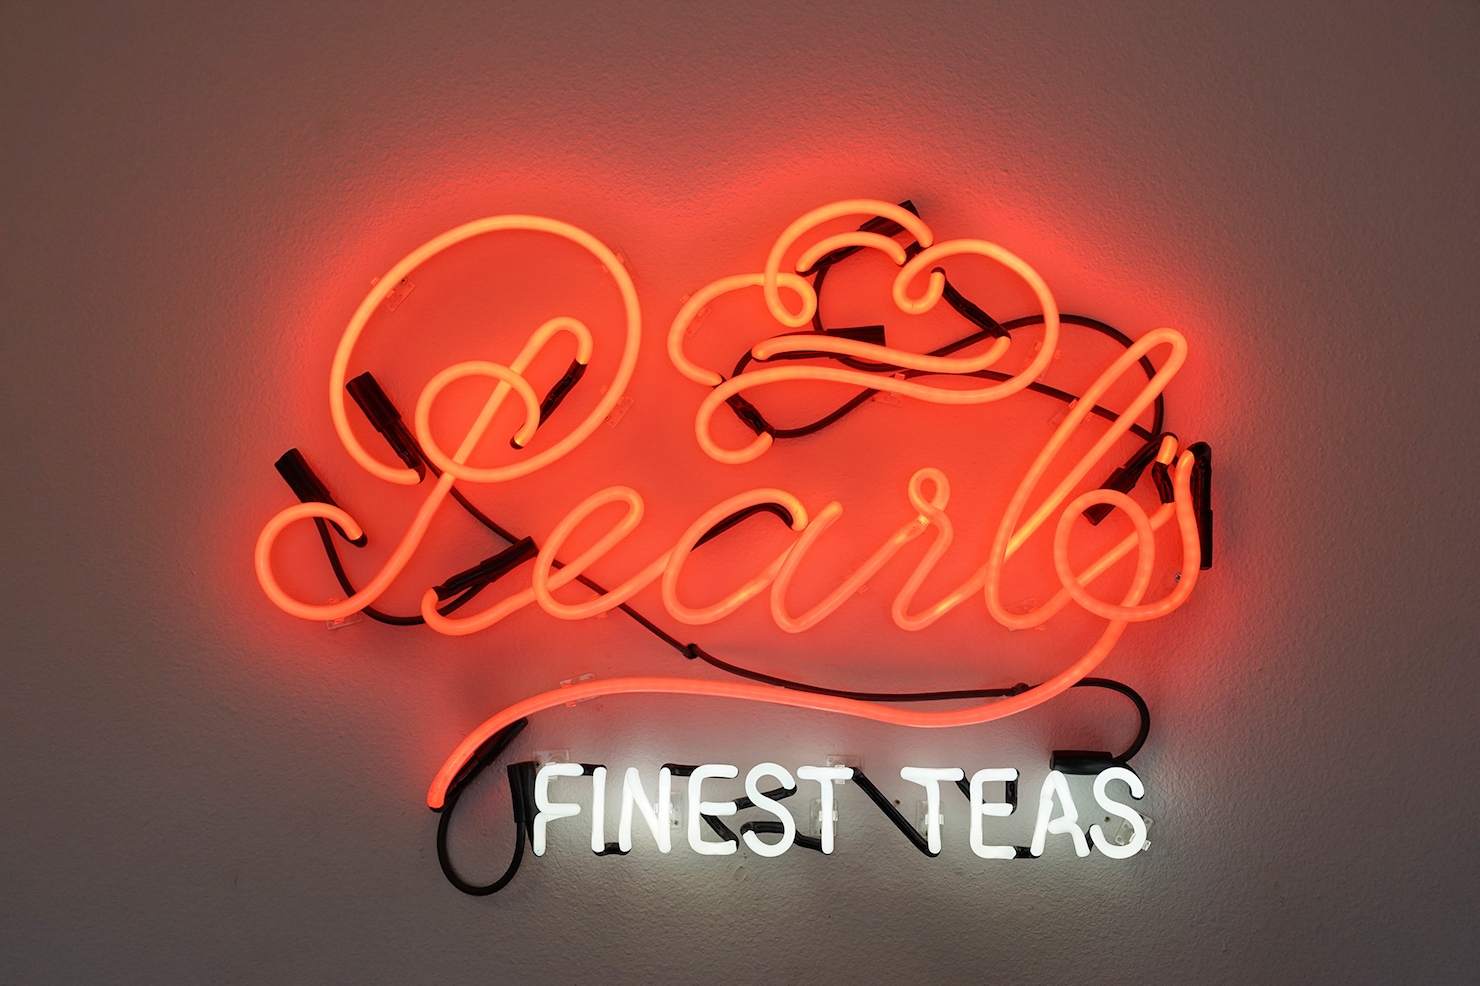 pearl's finest teas los angeles california boba bubble tea cafe sprudge